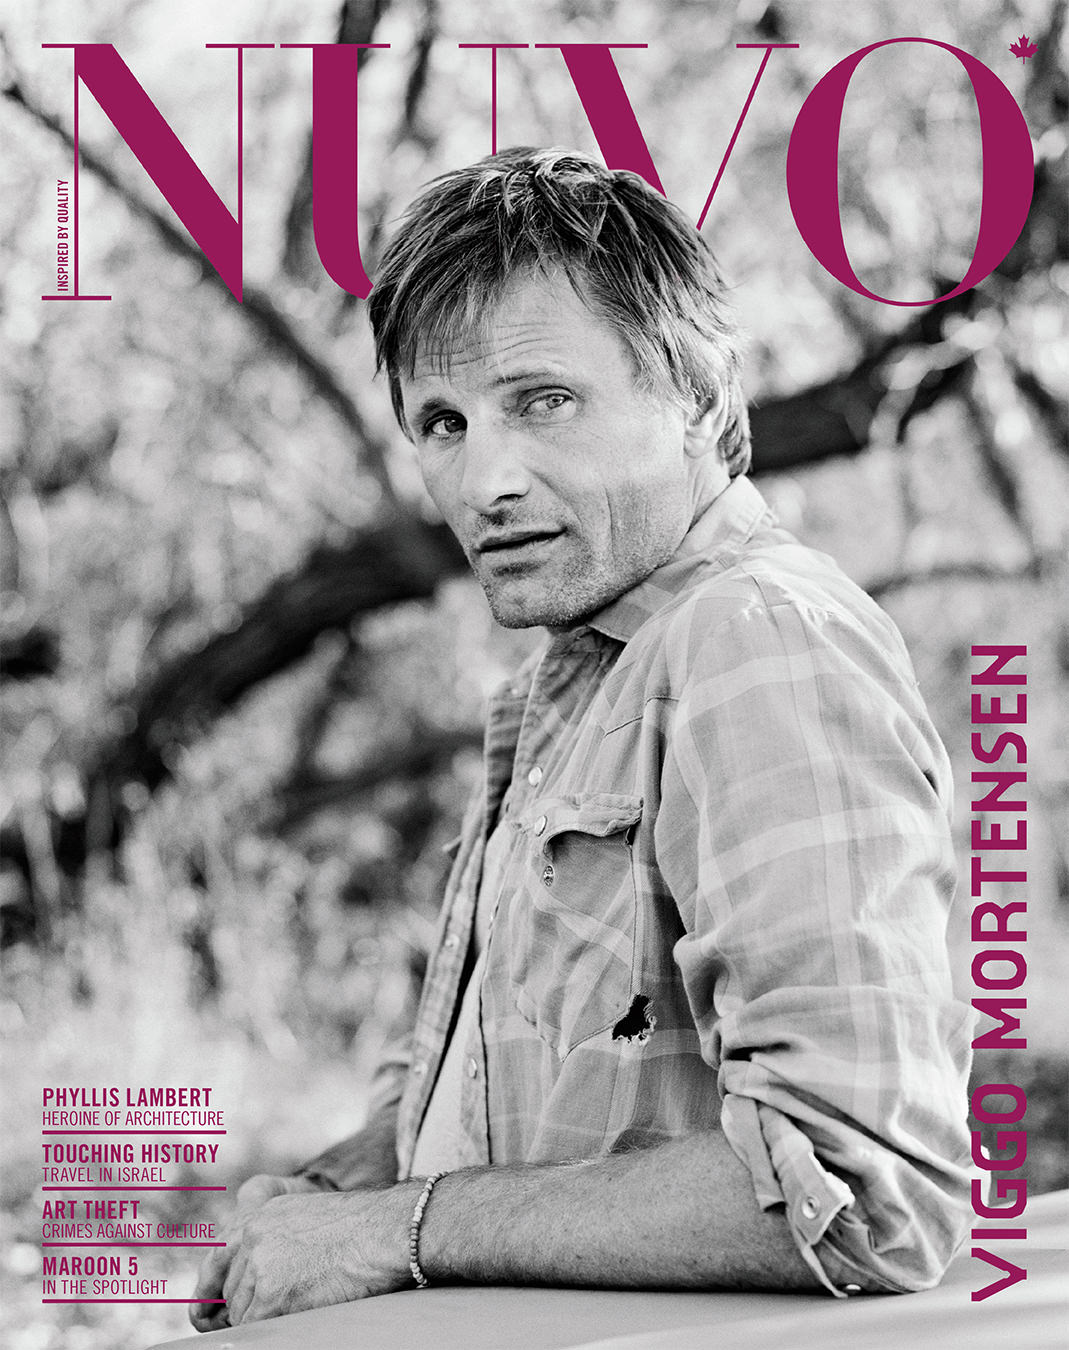 NUVO Magazine Autumn 2007 Cover featuring Viggo Mortensen